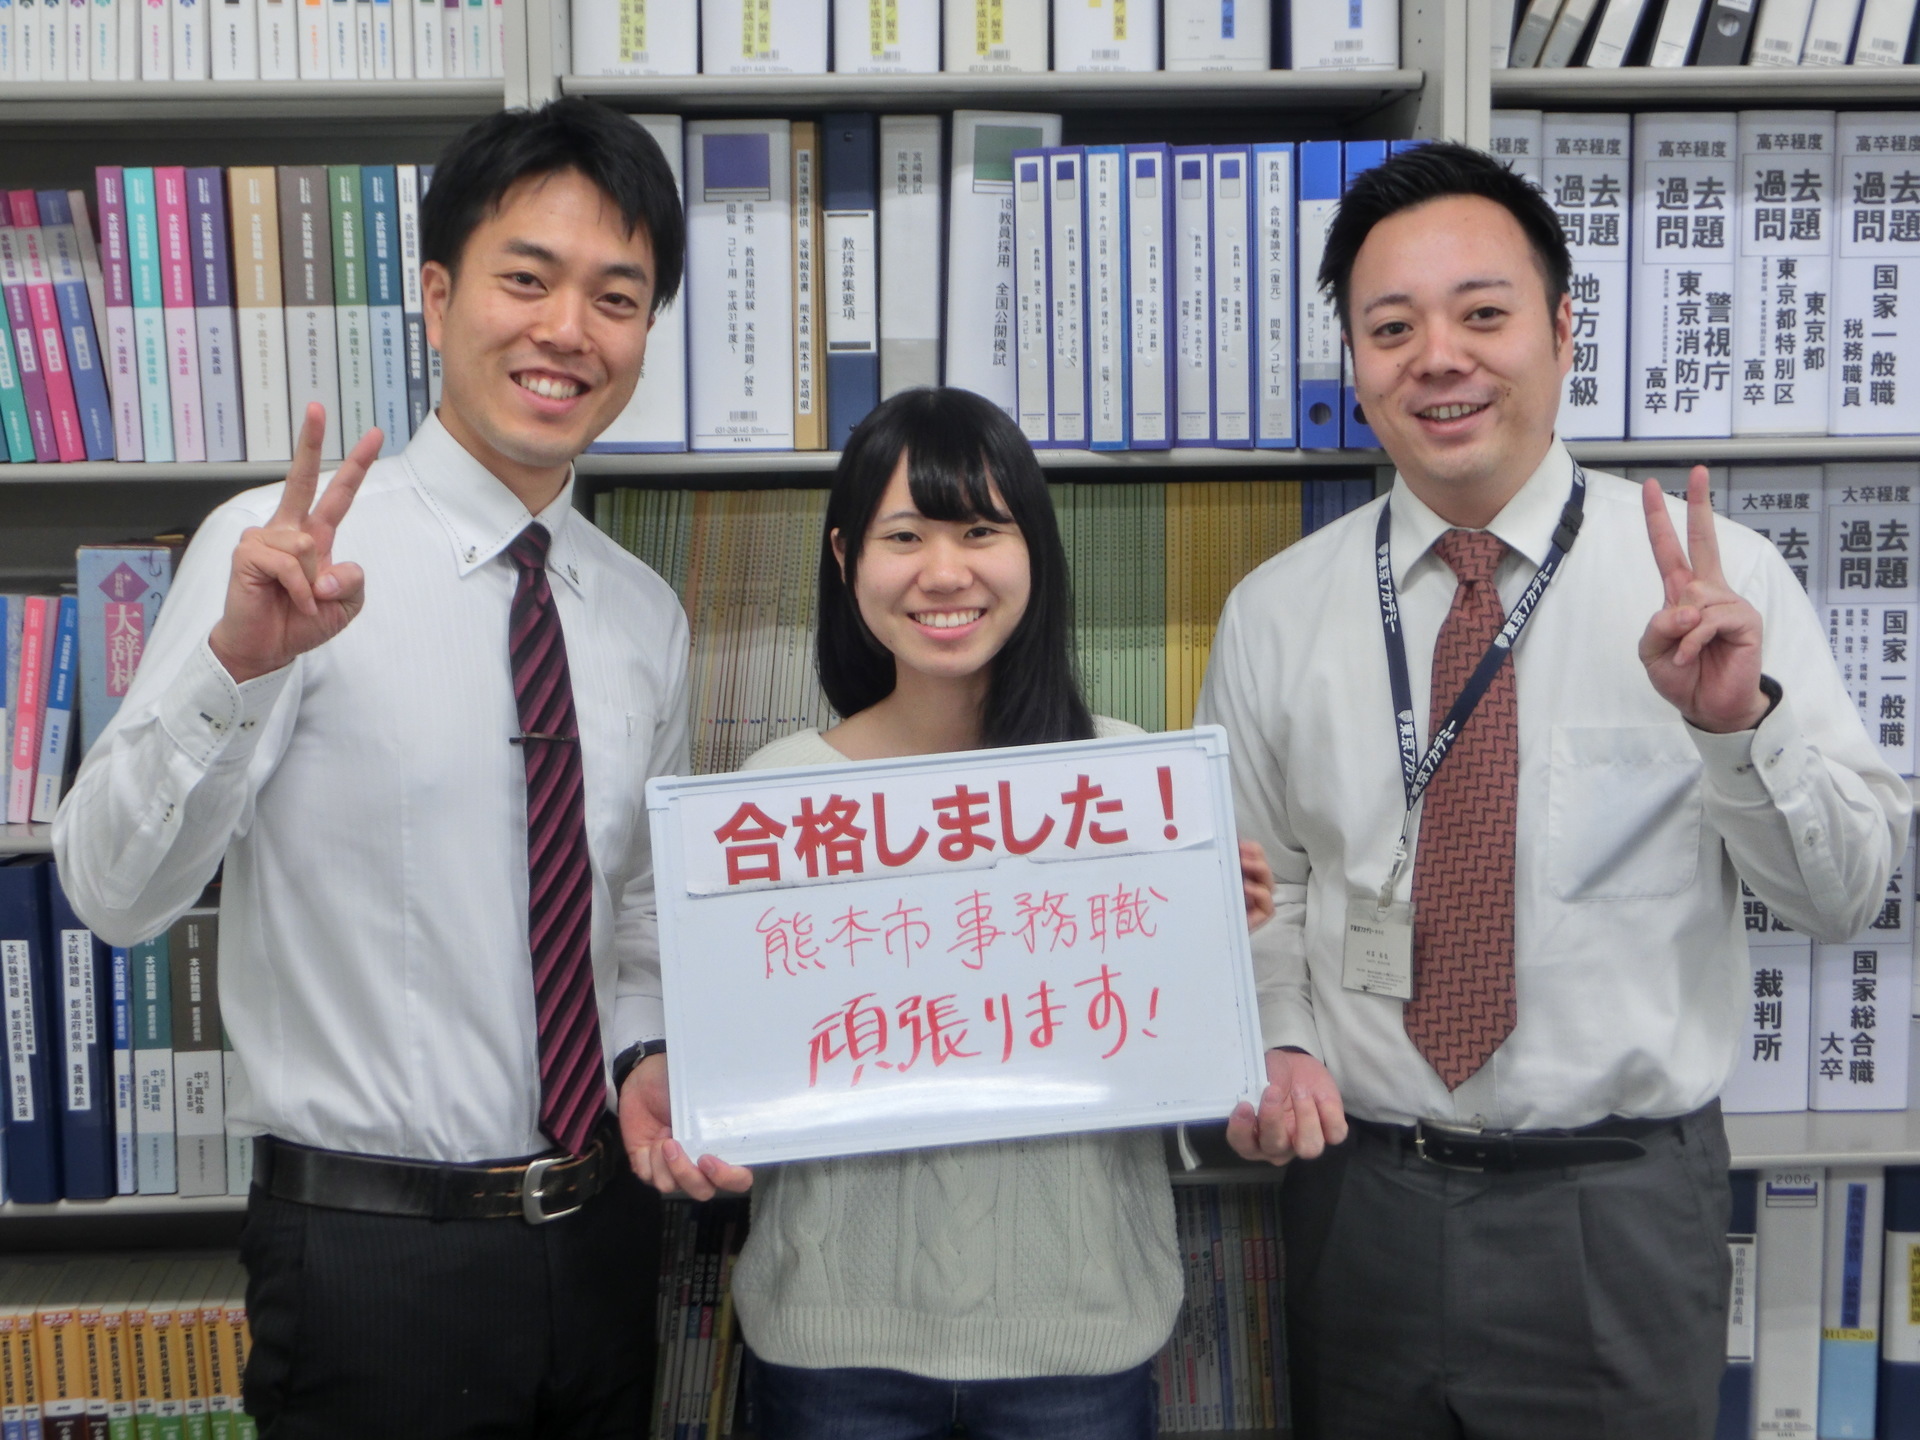 5 東京アカデミー熊本校 教員採用試験 看護師国家試験 公務員試験 のブログ